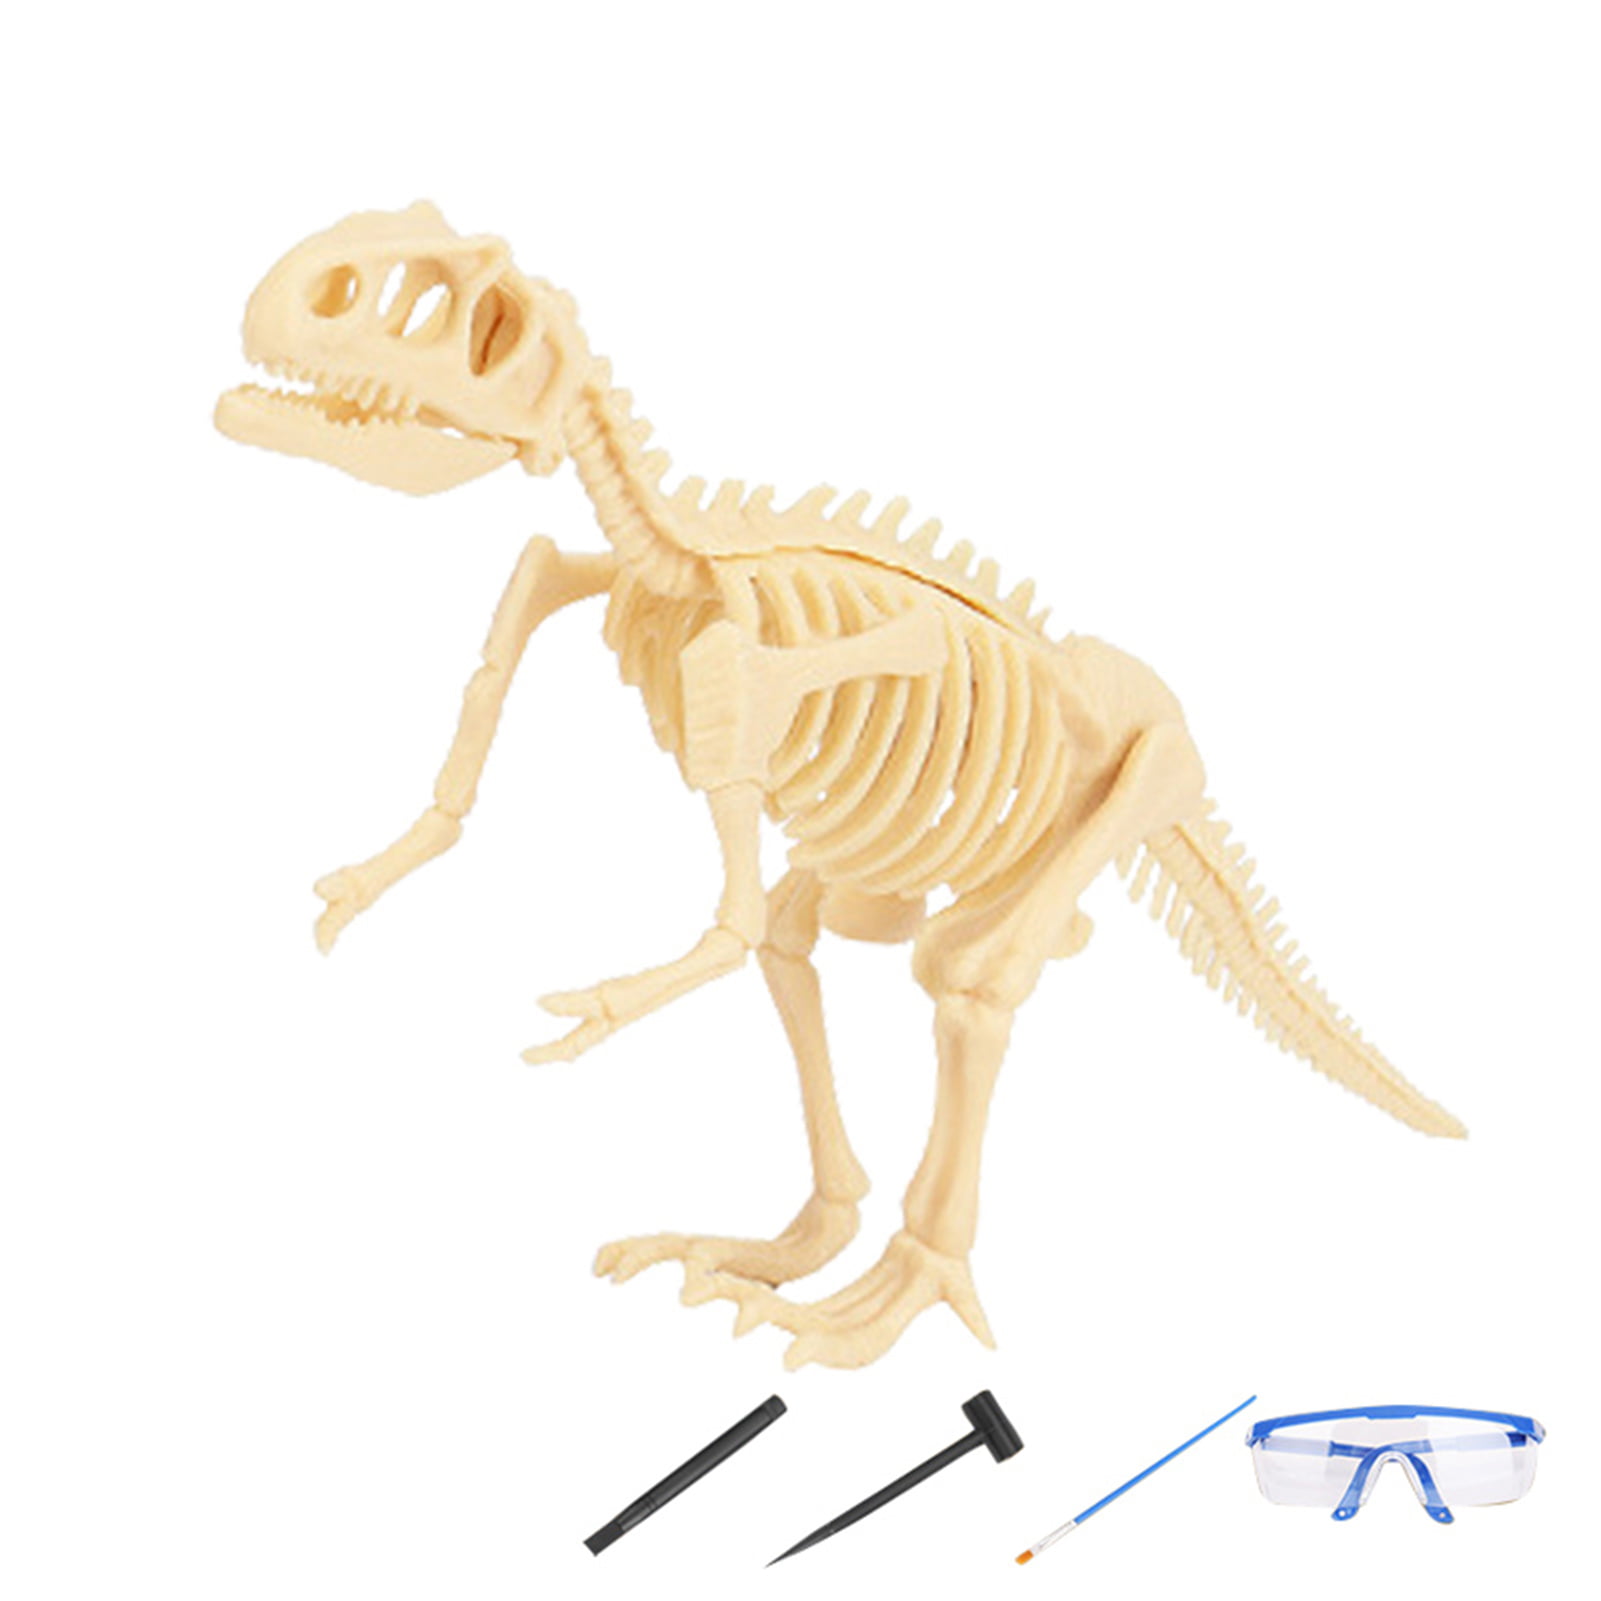 Dinosaur Excavation Kit Dig up Fossils Skeleton Model Kids Science Fun Toy Gifts 